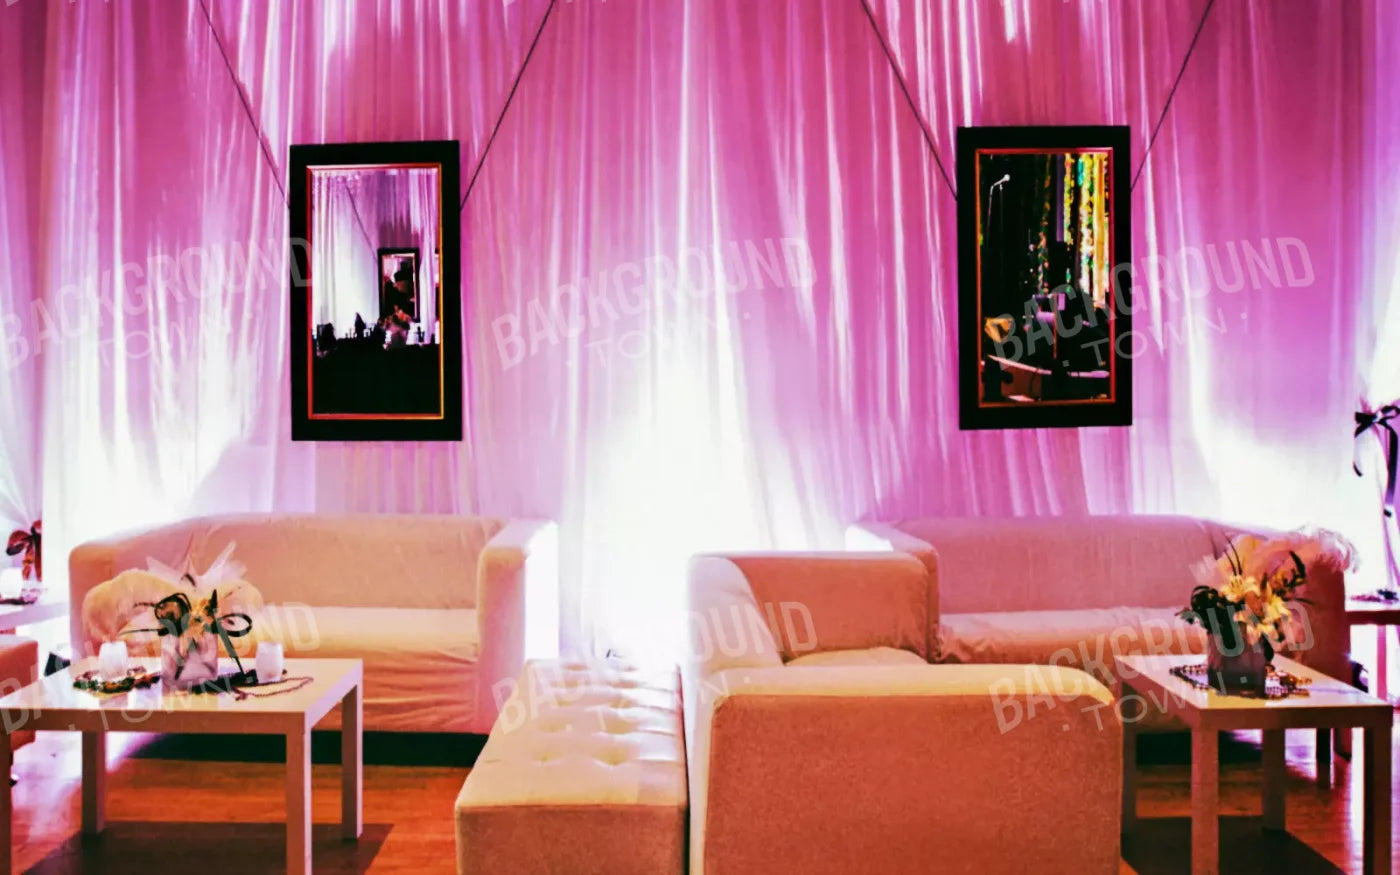 Club Lounge 14X9 Ultracloth ( 168 X 108 Inch ) Backdrop